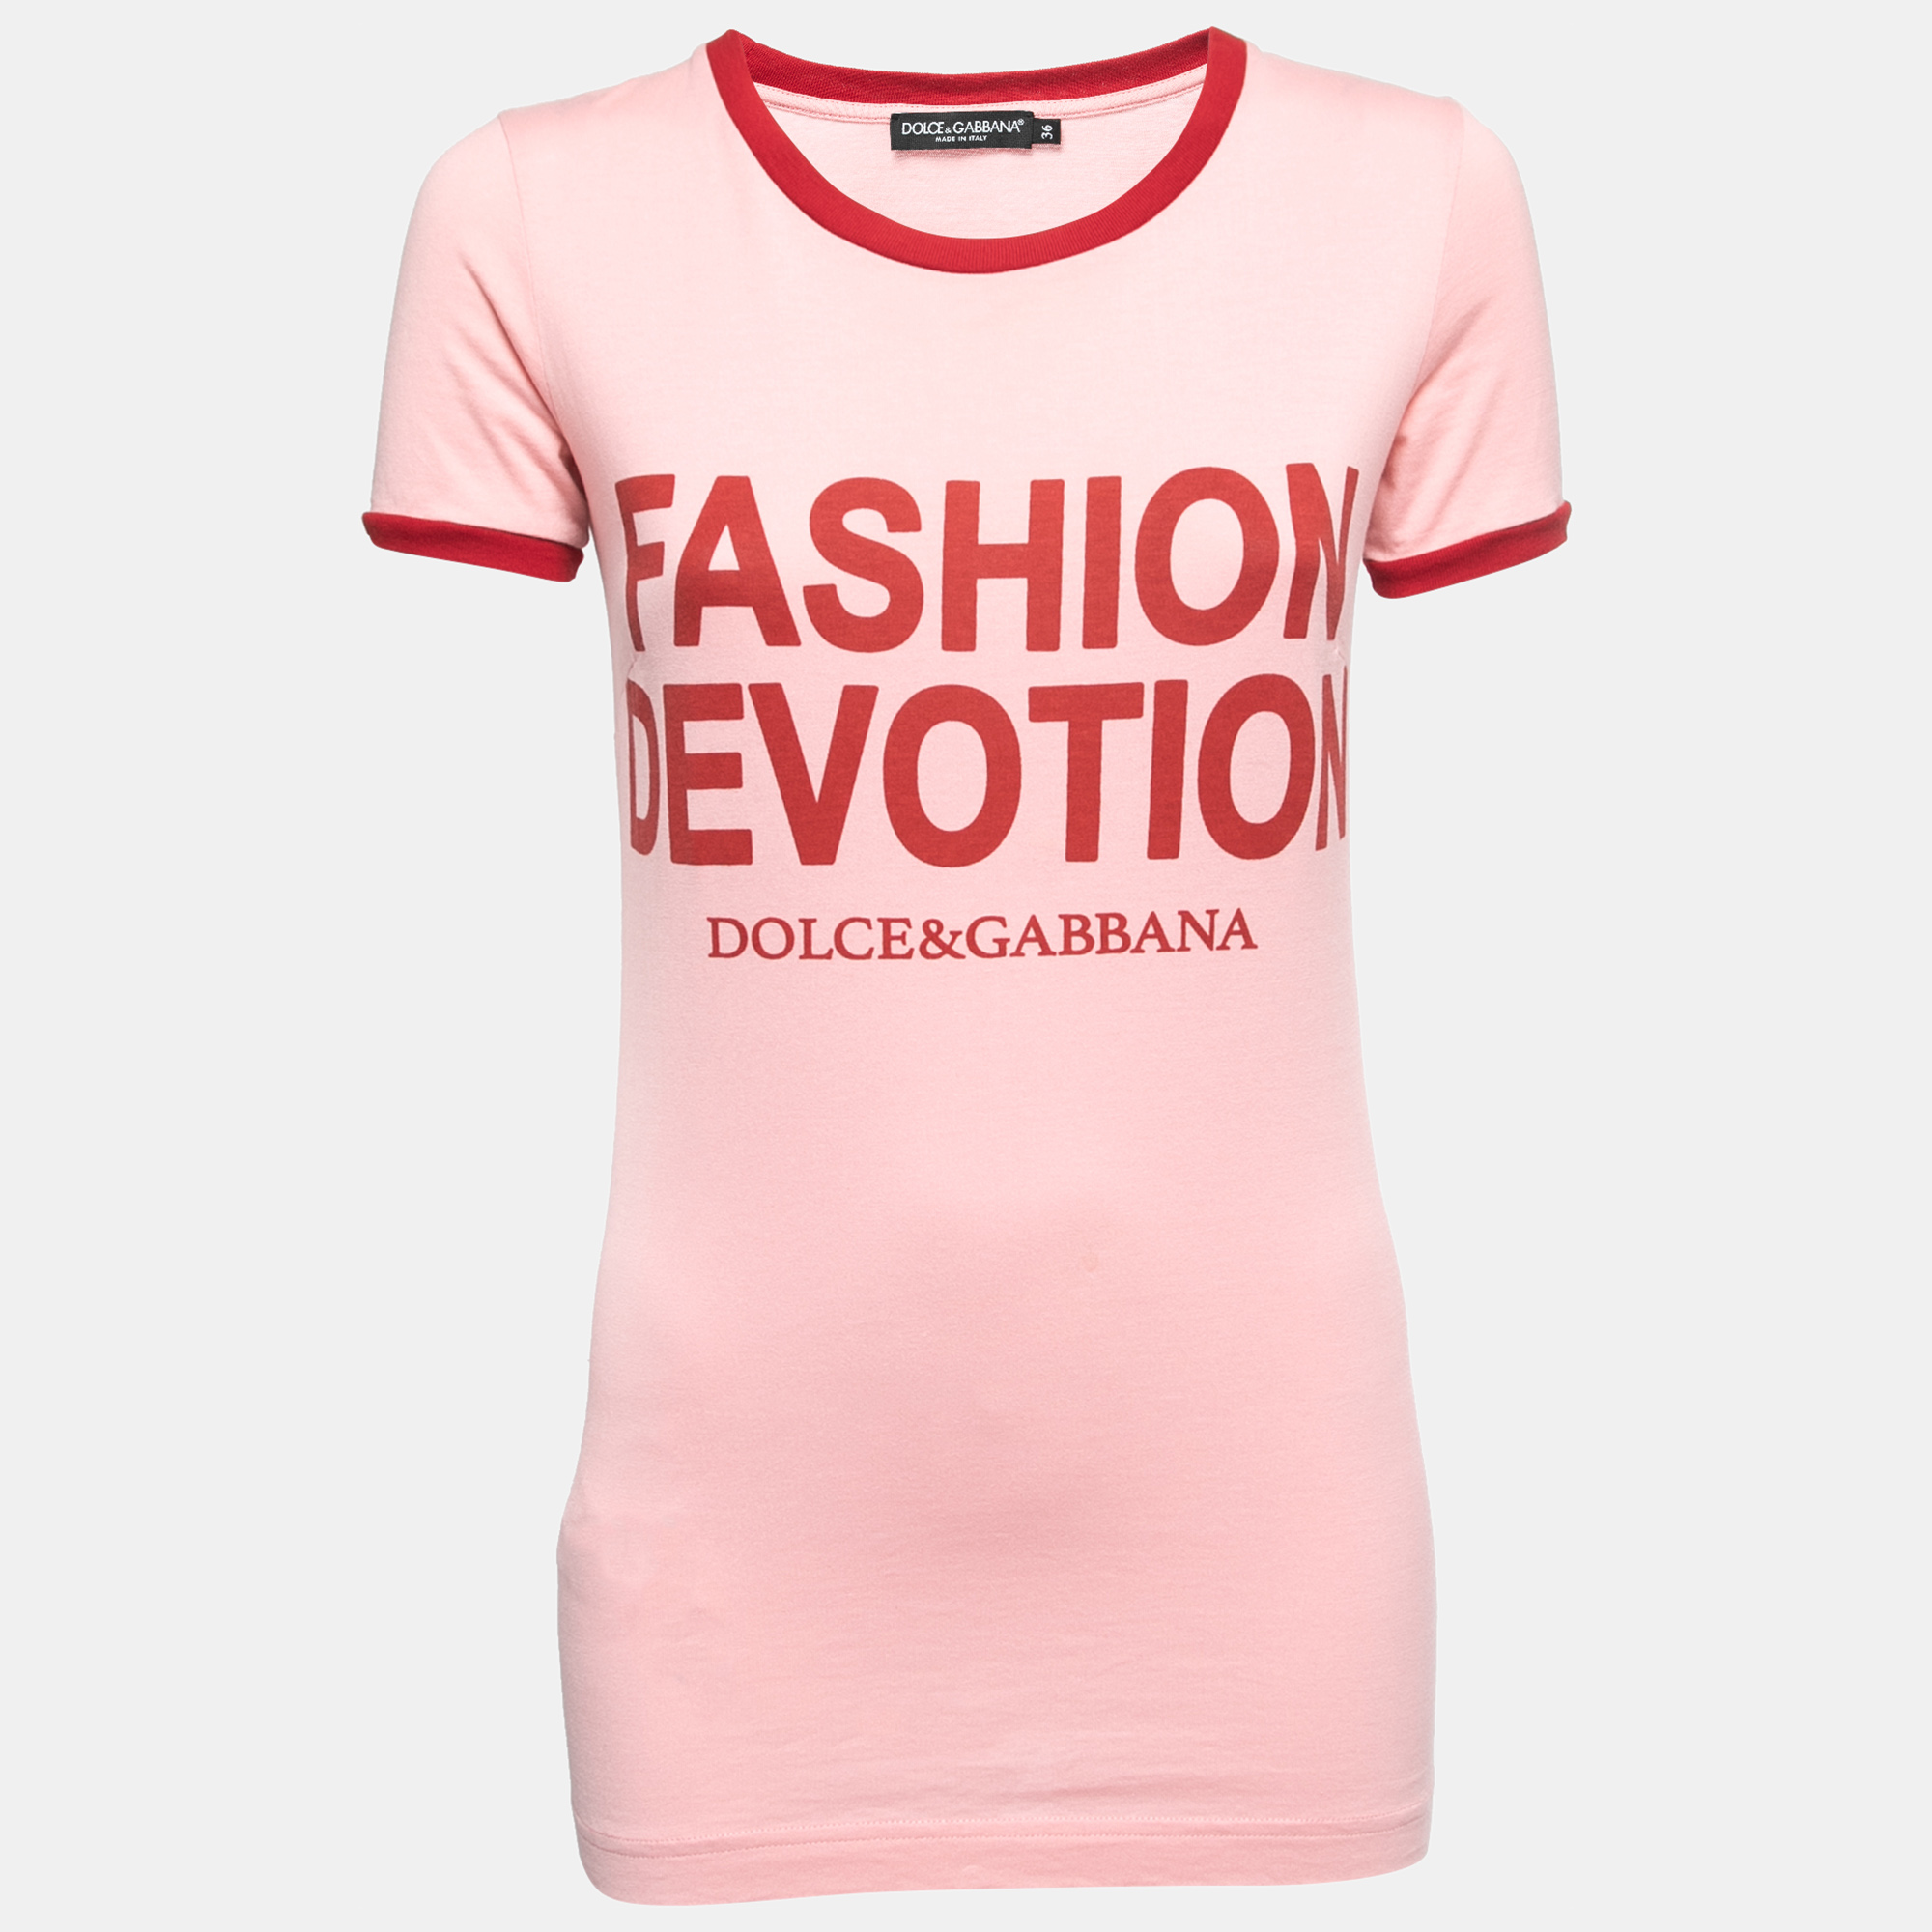 Pre-owned Dolce & Gabbana Pink Fashion Devotion Print Cotton Crew Neck T-shirt Xs